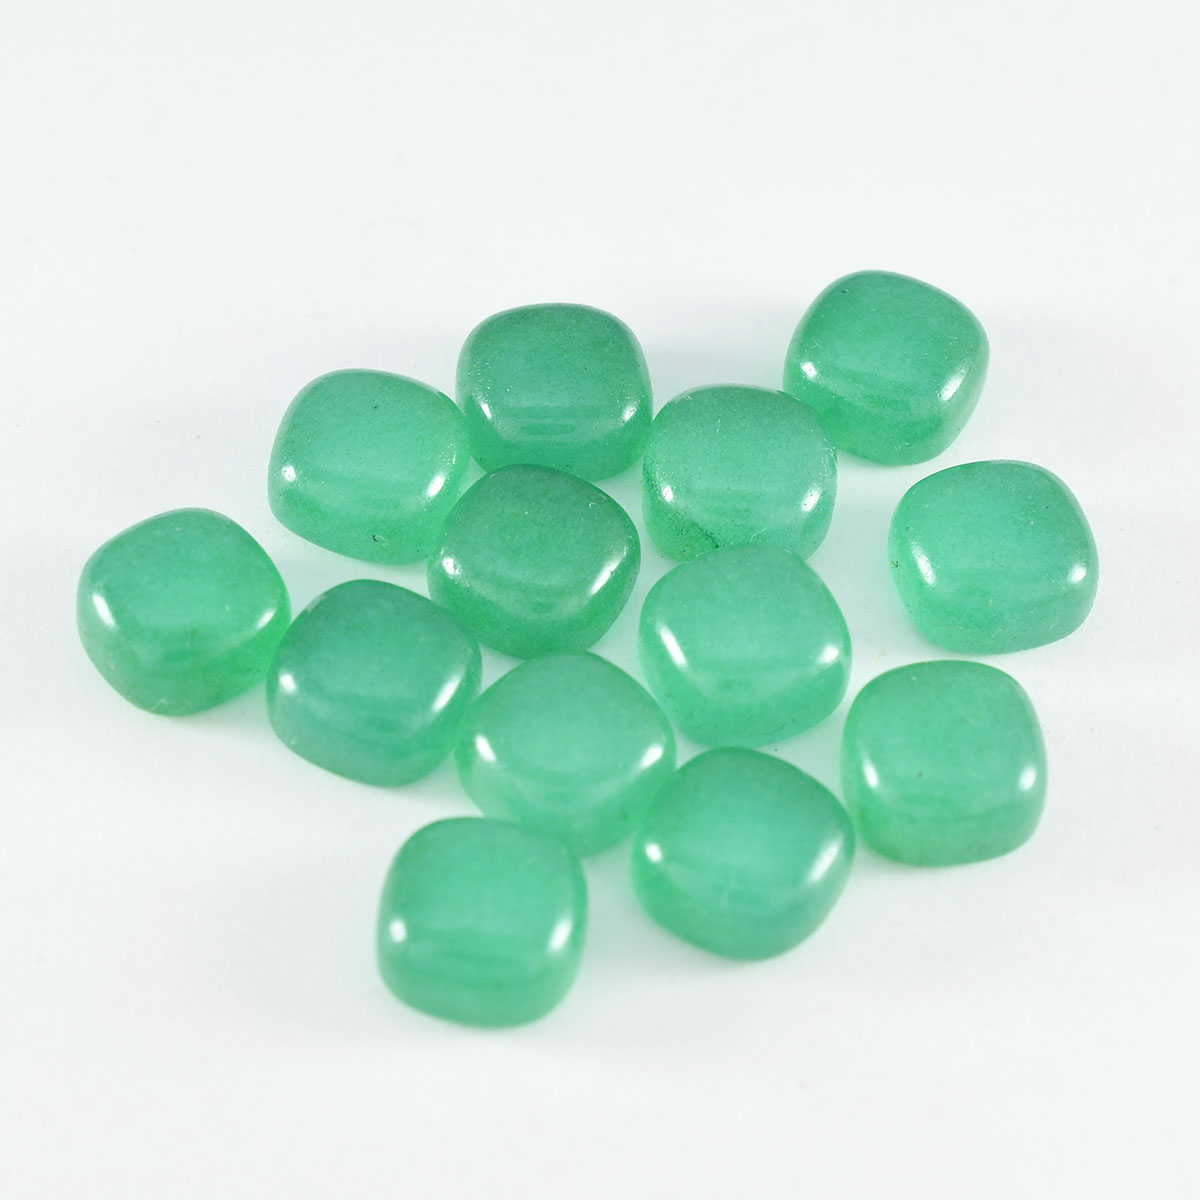 Riyogems 1PC groene onyx cabochon 5x5 mm kussenvorm A kwaliteit losse edelstenen